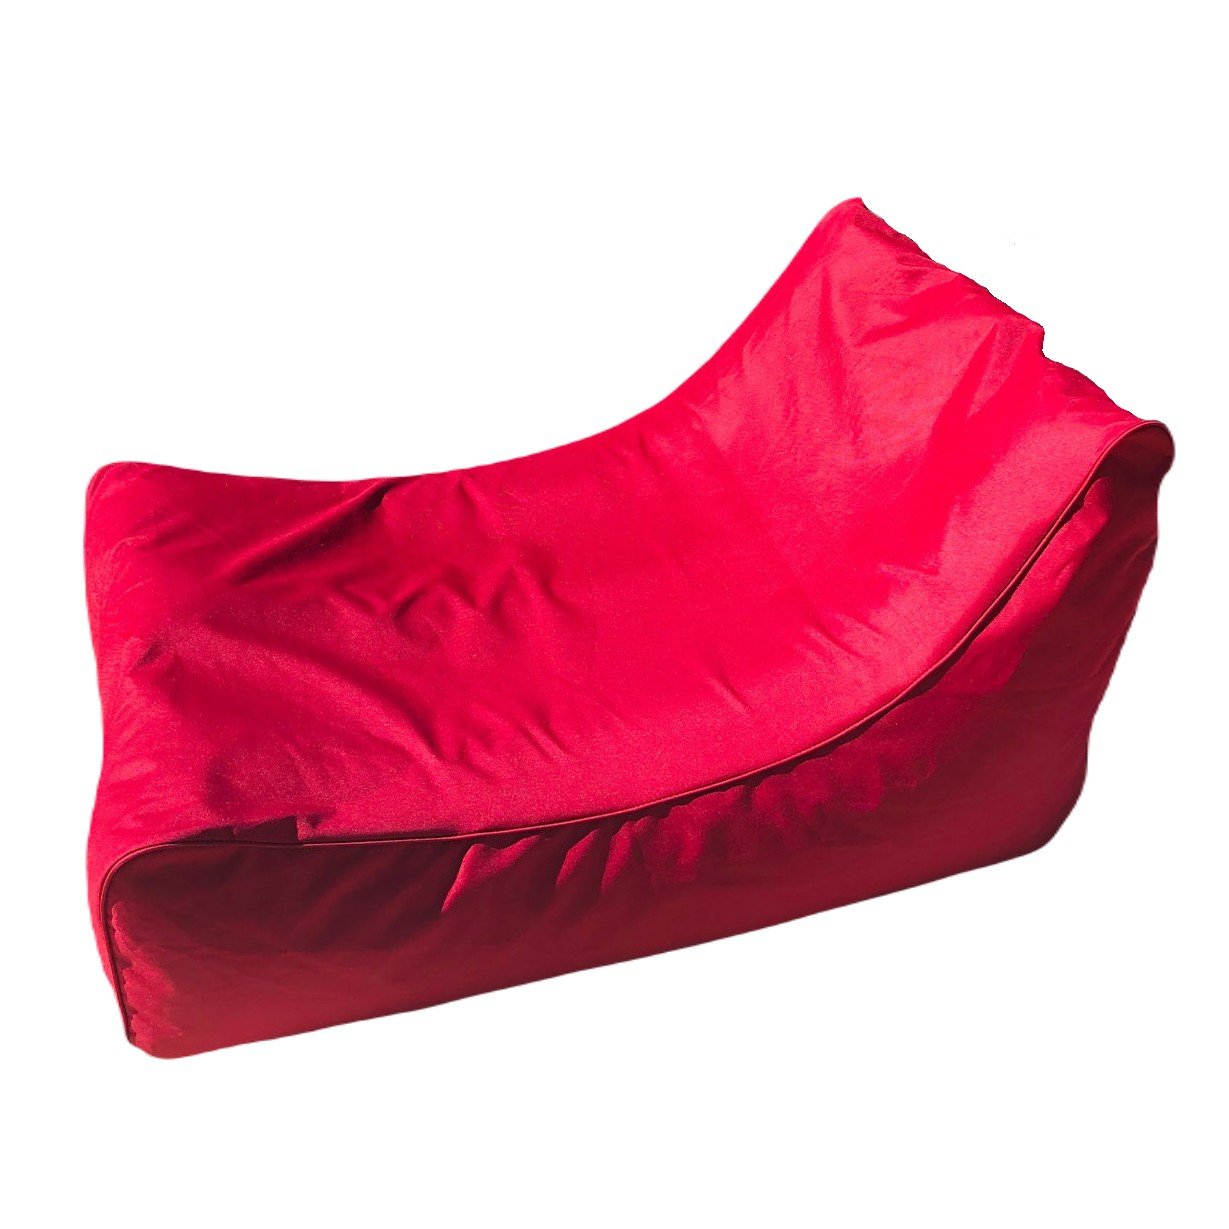 Pool premium lounger red - Wink'Air Nap